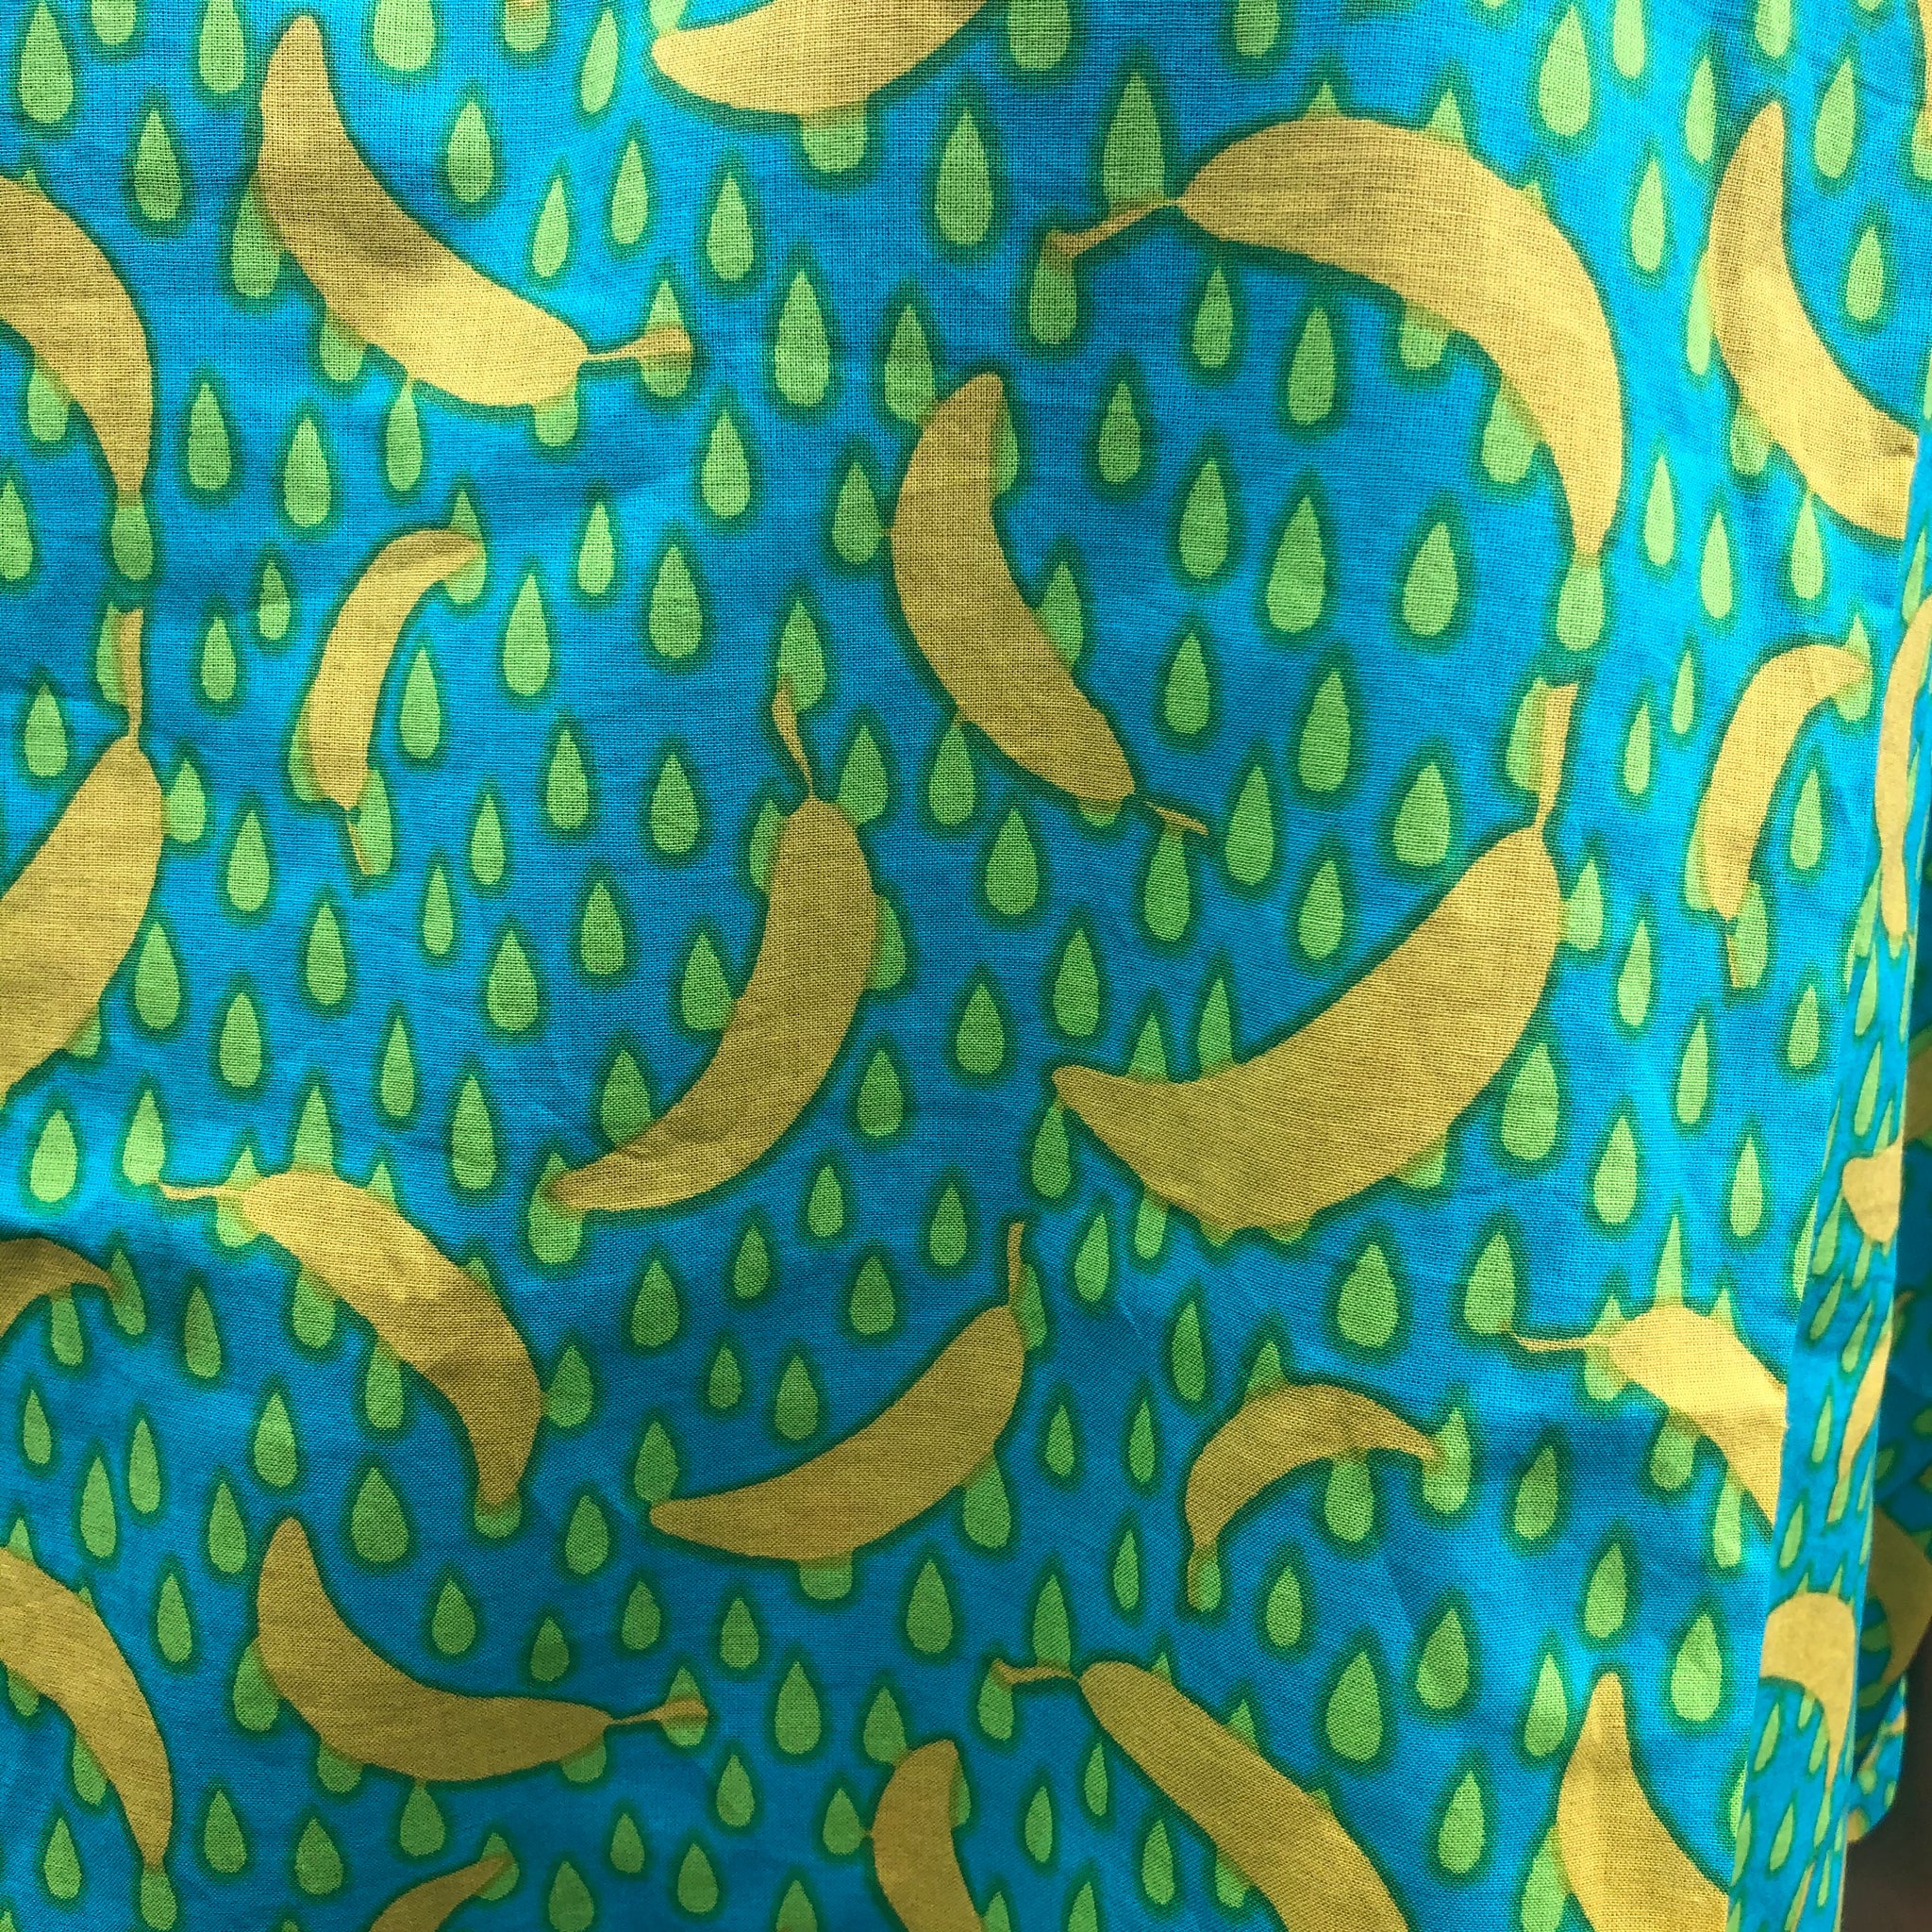 Fair Trade Ethical Cotton Beach Cover Up Banana Pattern